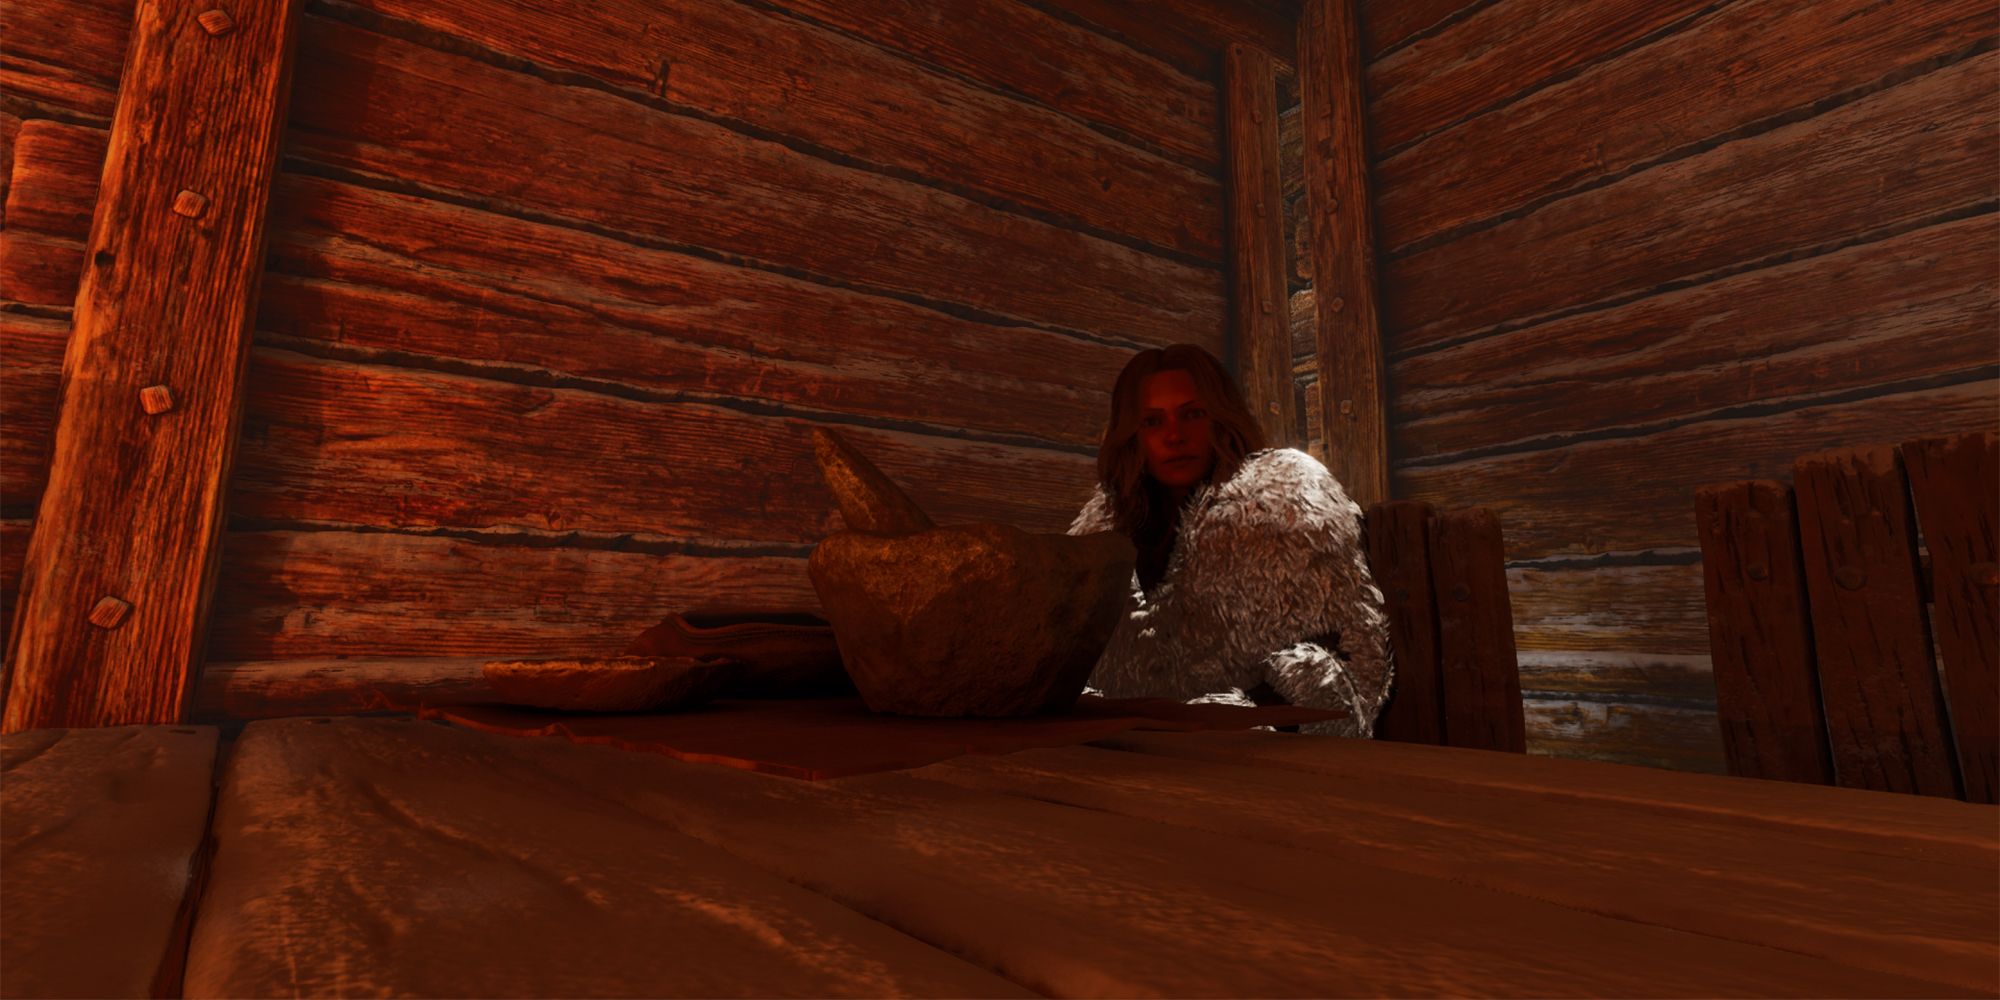 El jugador ascendido de Ark Survival se sentó en la mesa